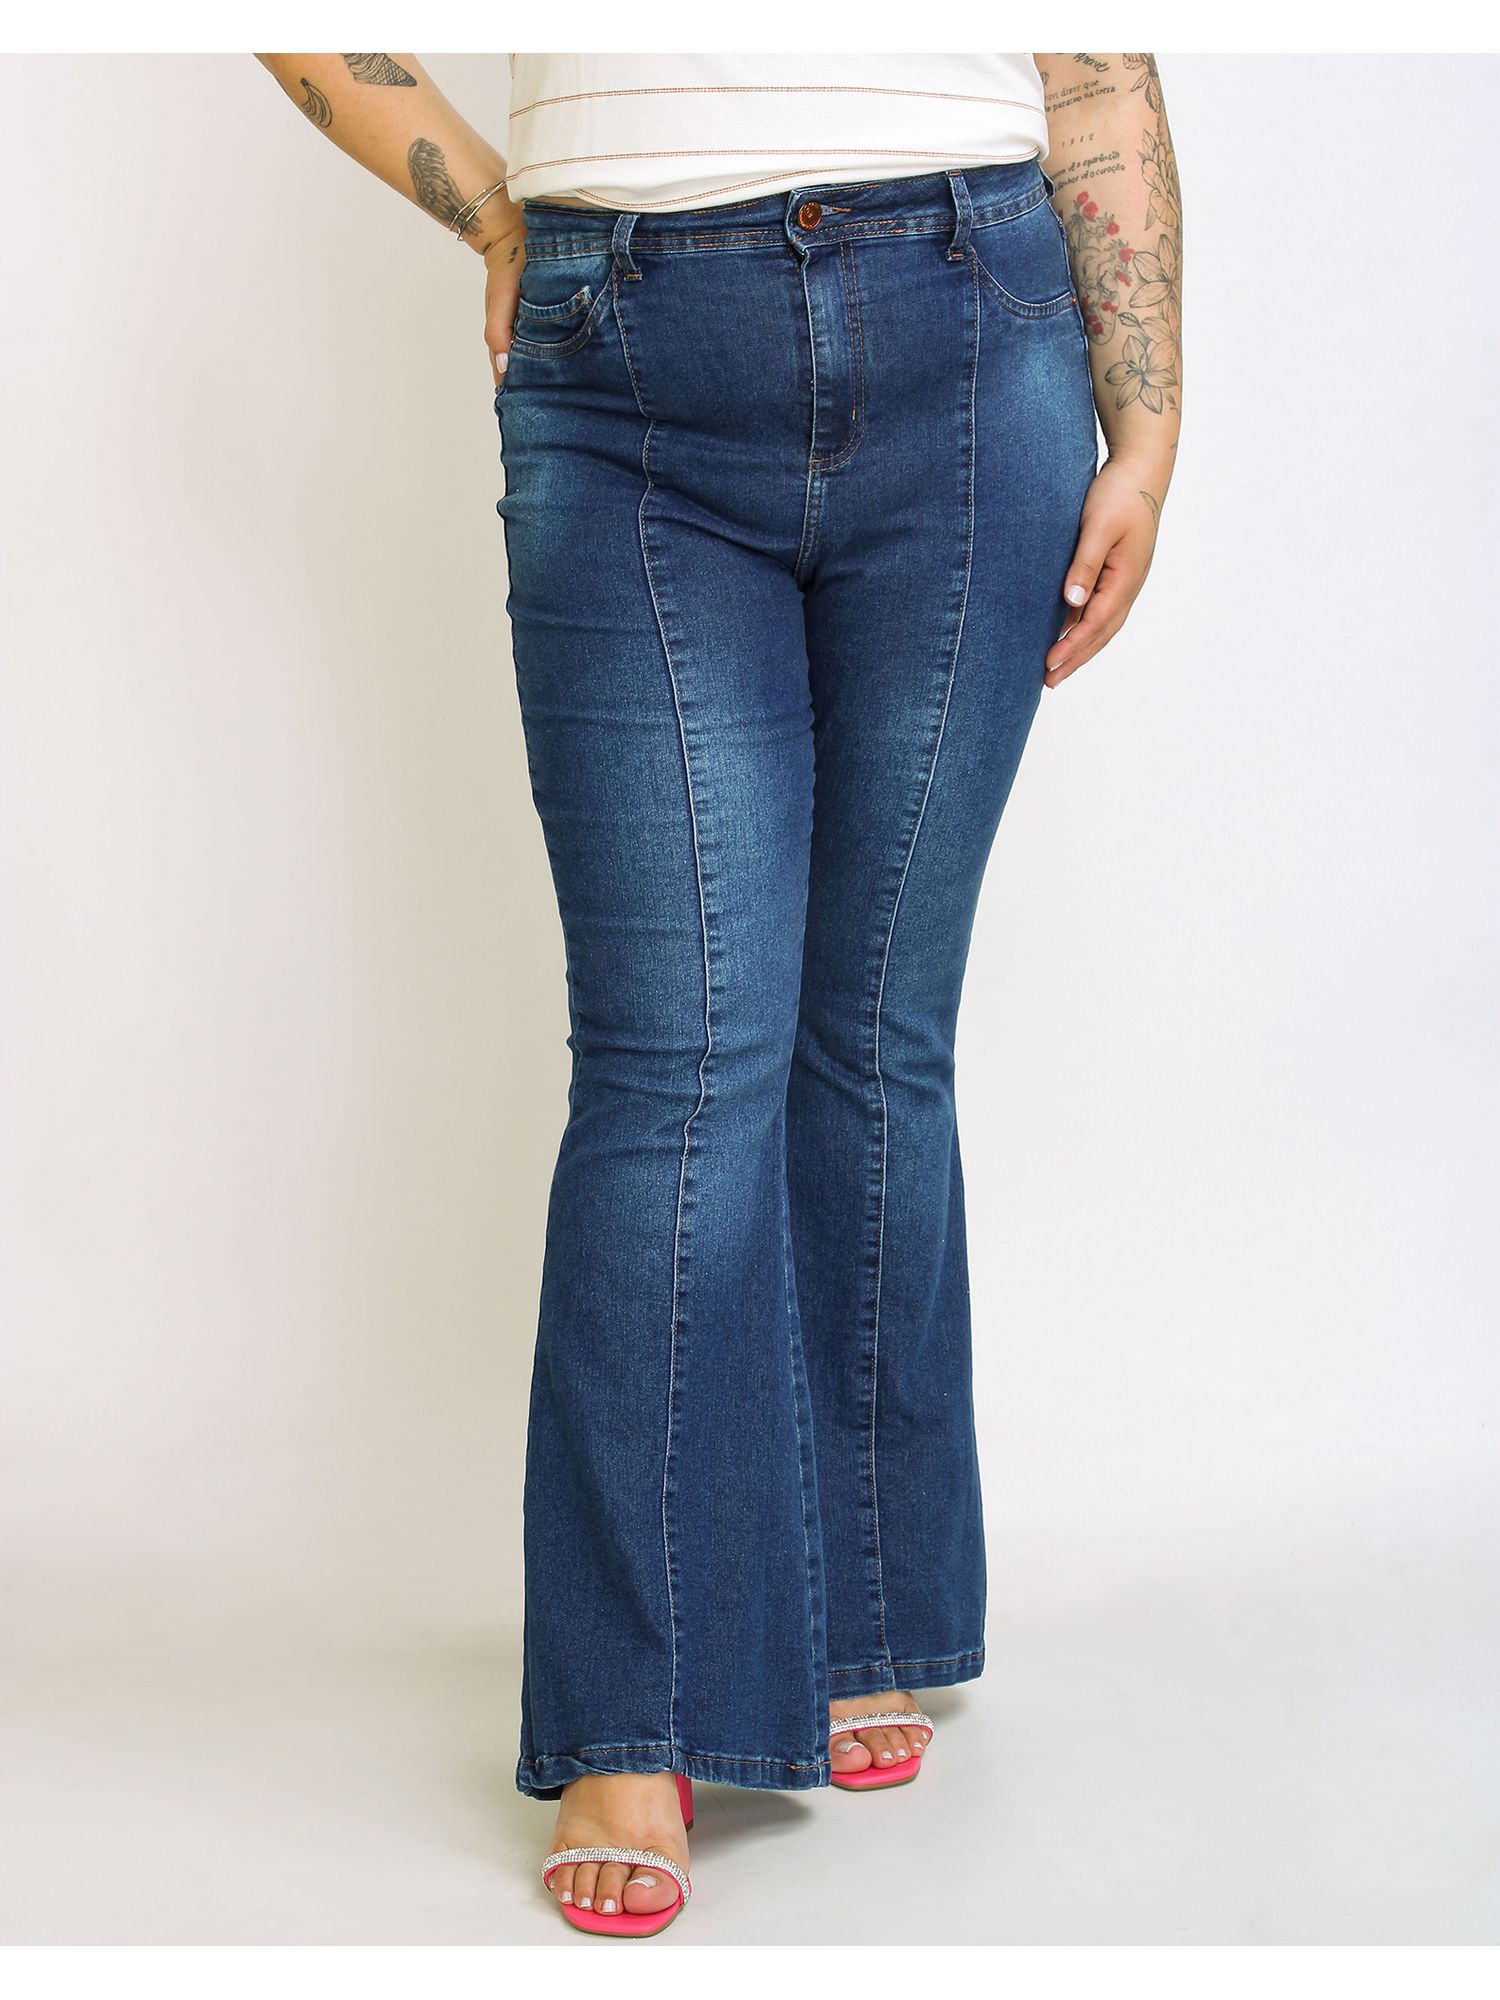 https://lojasbesni.vteximg.com.br/arquivos/ids/451356-1500-2000/650749002-calca-jeans-flare-plus-size-feminina-jeans-escuro-48-1b9.jpg?v=638068183312970000